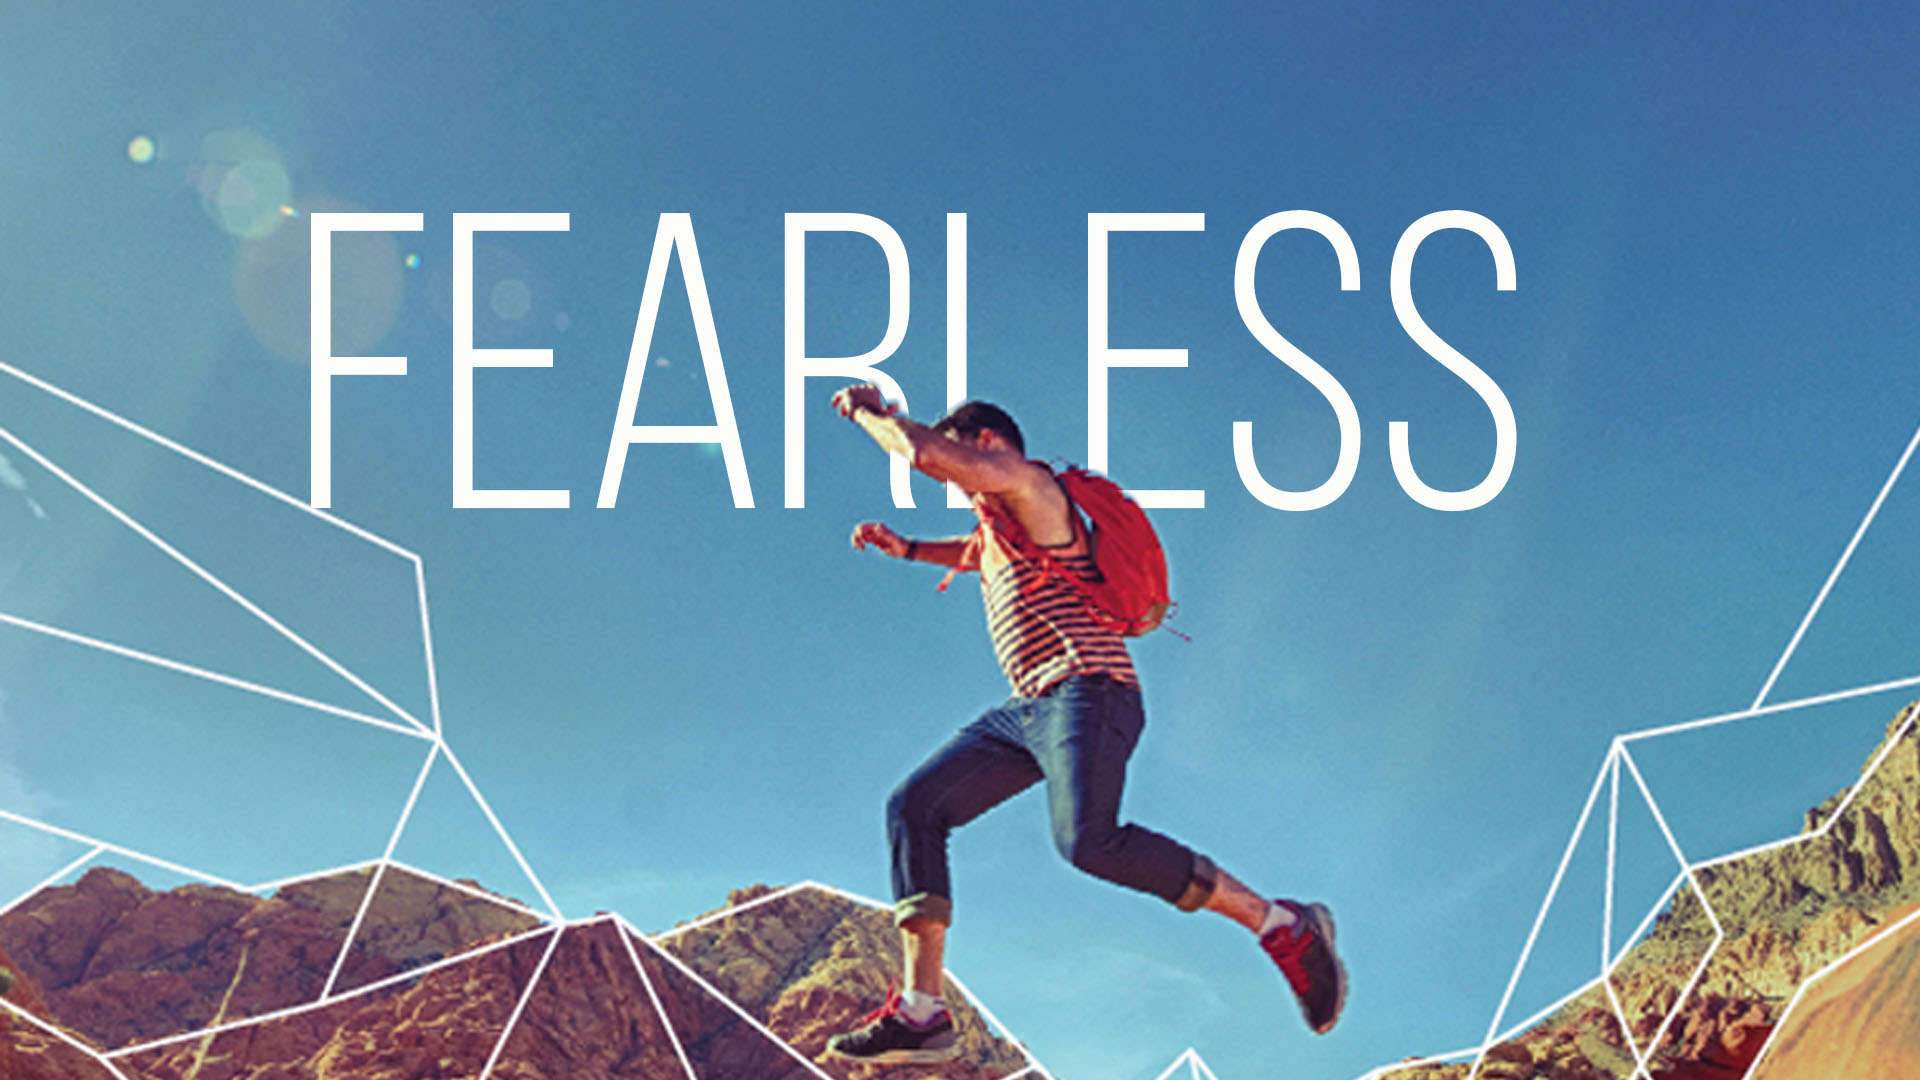 Fearless (For Teens)

8-Week Program
Tuesdays | 5:00pm
September 6 - October 25
